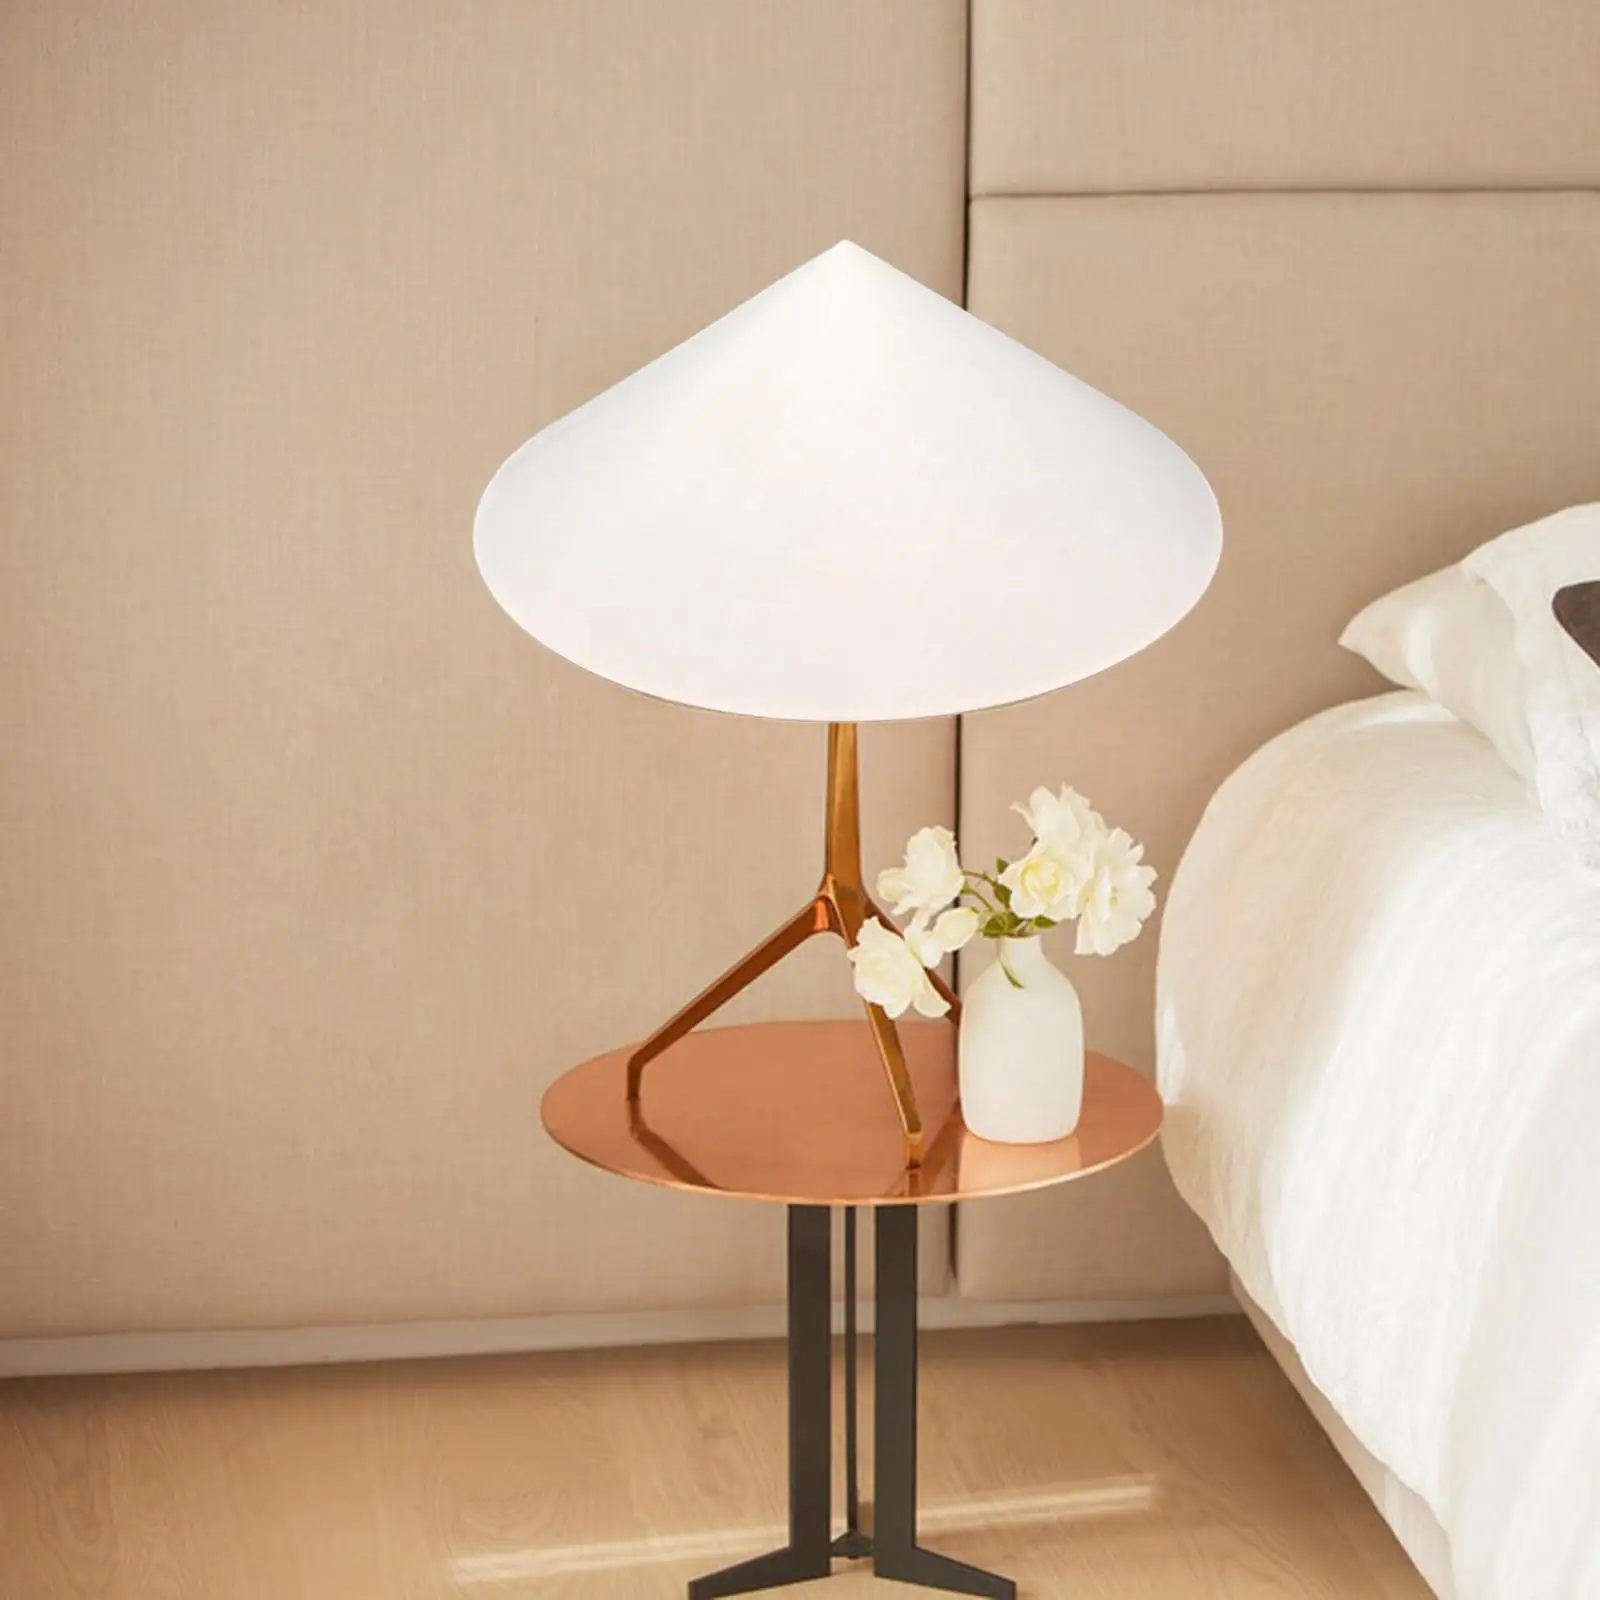 Lamp Shade Bedside Lights Lighting Fixture Pastoral Style Durable Portable Retro for Bedroom Living Room Home Tearoom Restaurant